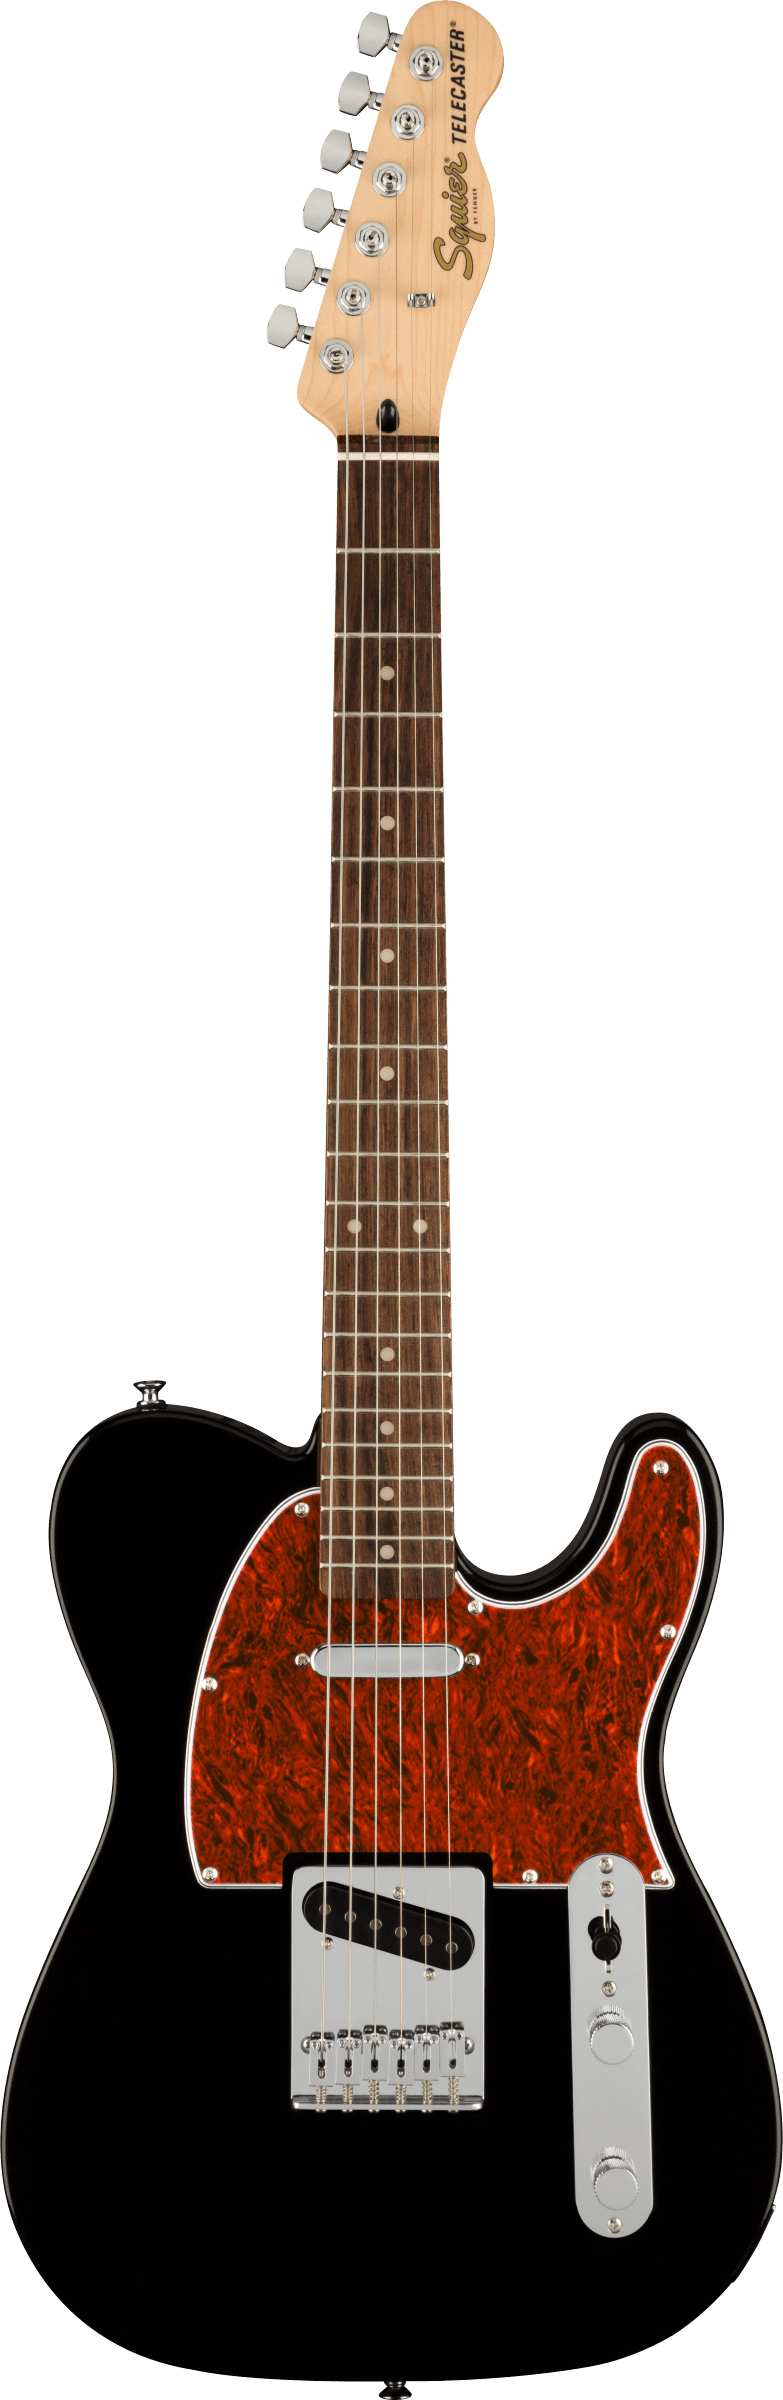 Fender Squier Affinity Telecaster - Black